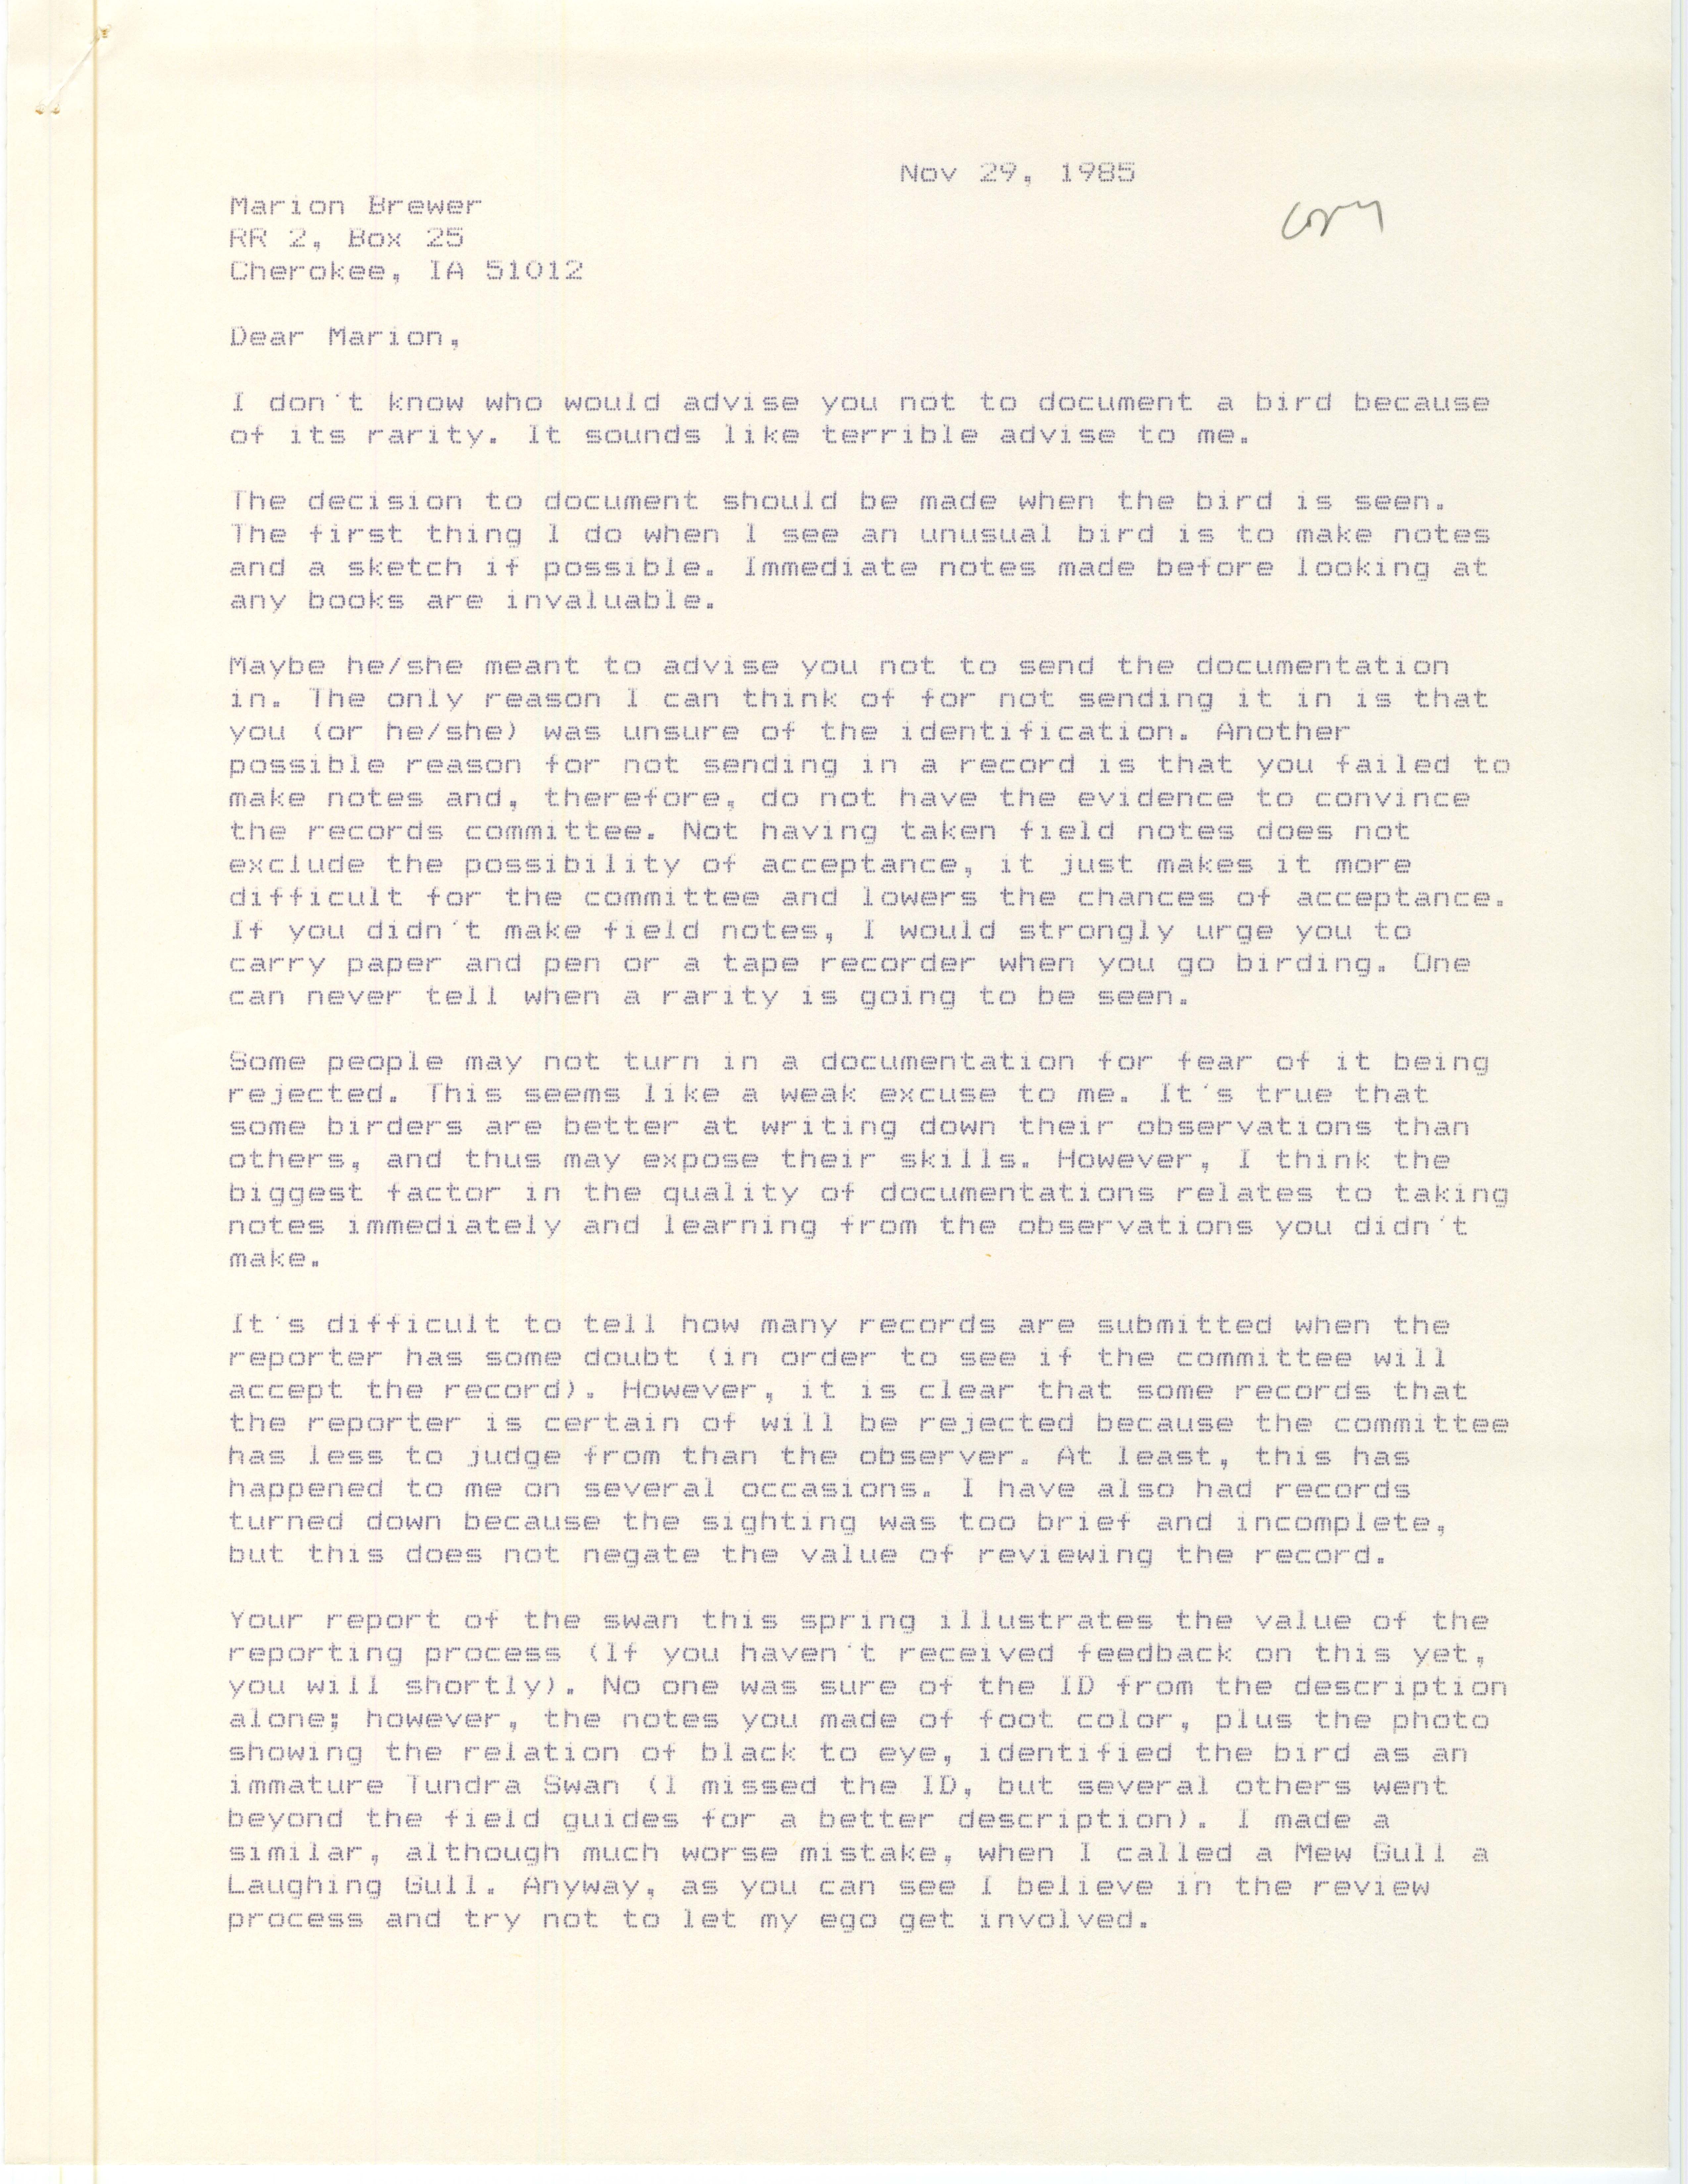 Thomas Kent letter to Marion Brewer regarding documenting sightings, November 29, 1985